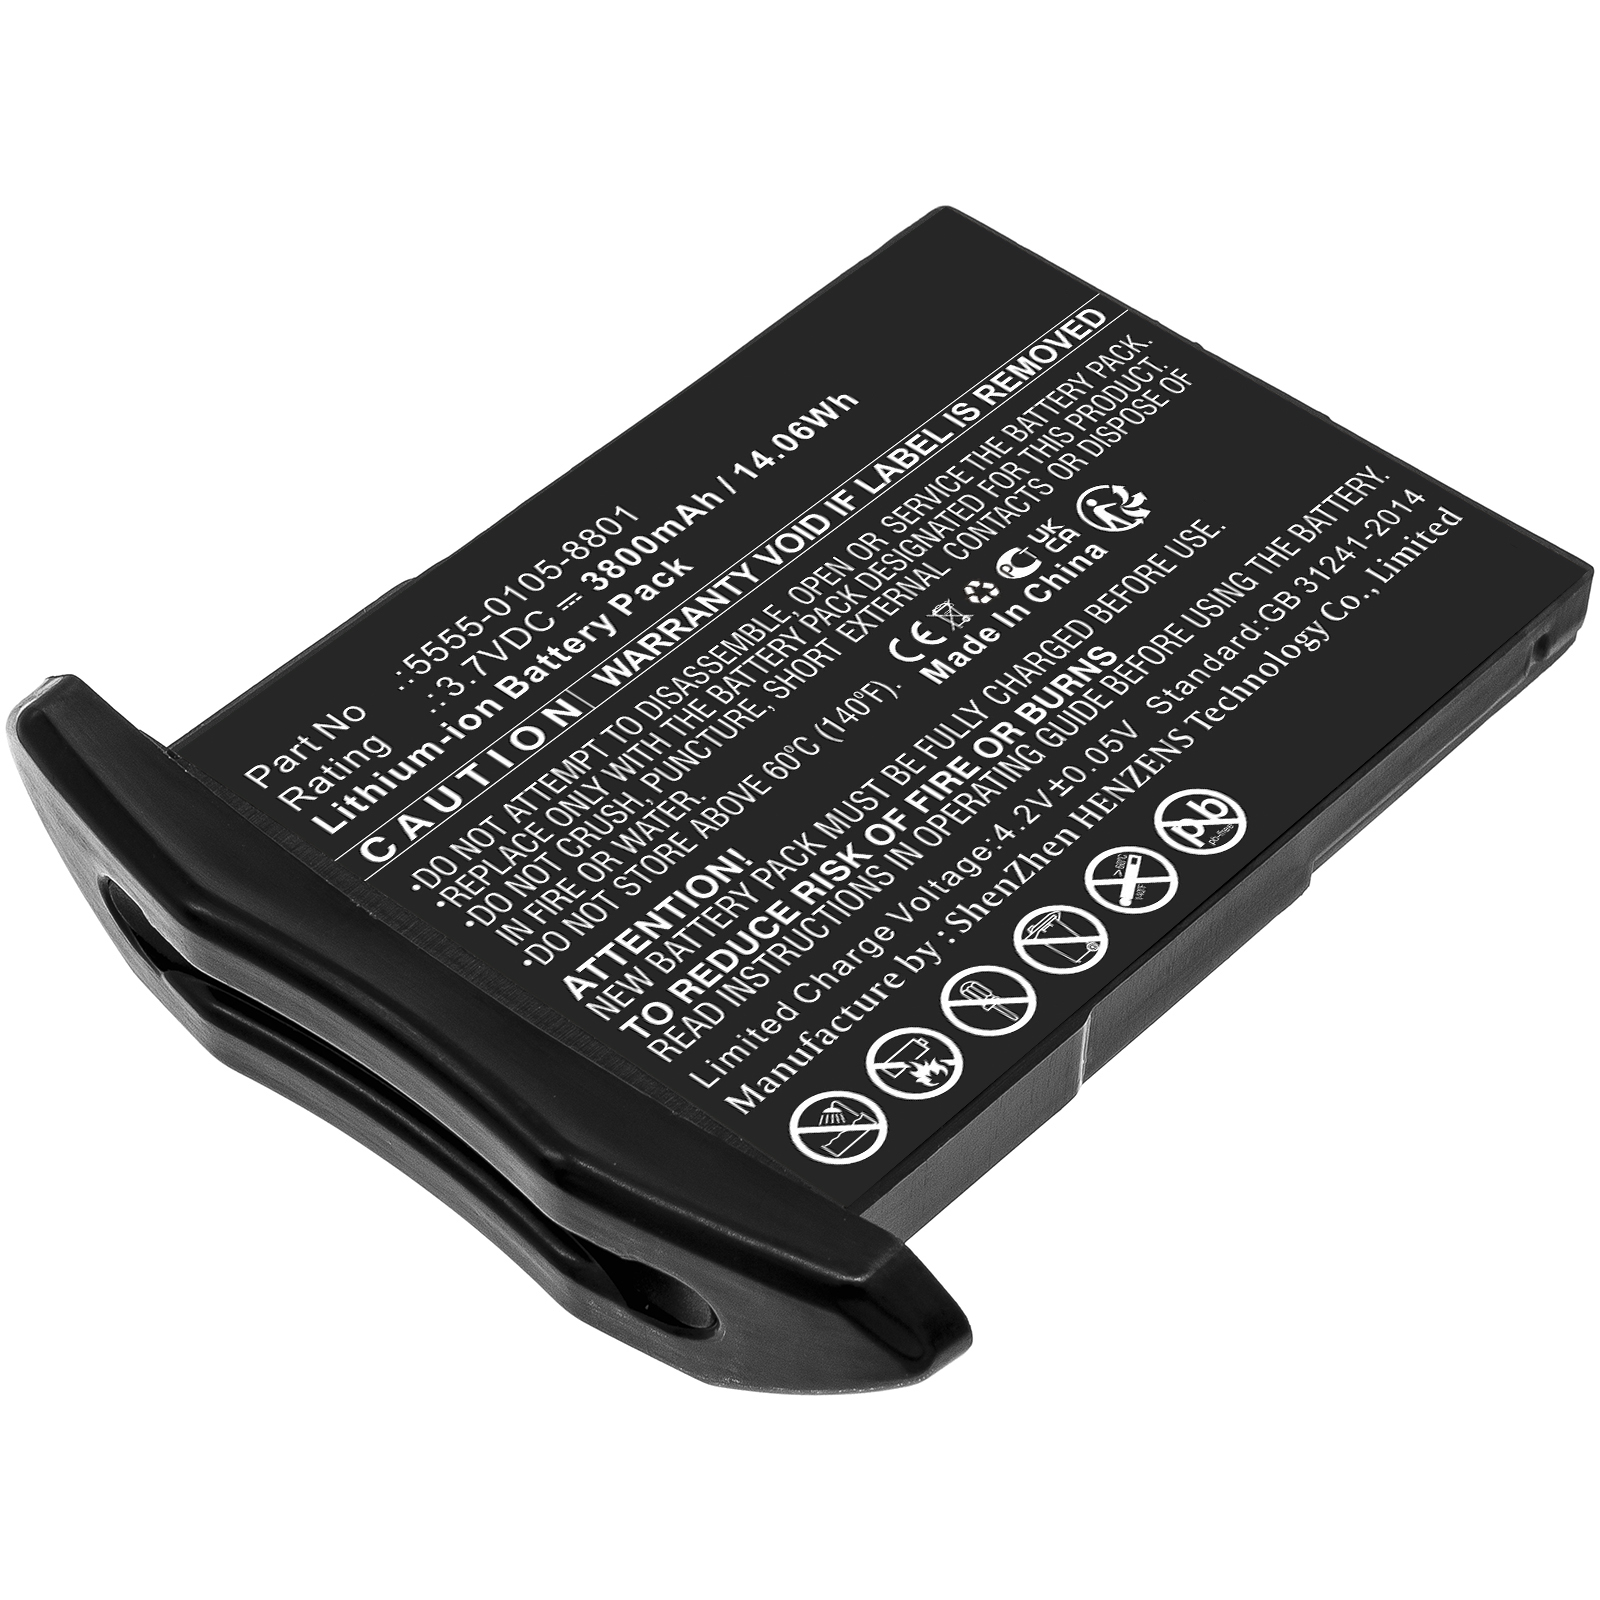 Synergy Digital Barcode Scanner Battery, Compatible with 5555-0105-8801 Barcode Scanner Battery (3.7V, Li-ion, 3800mAh)